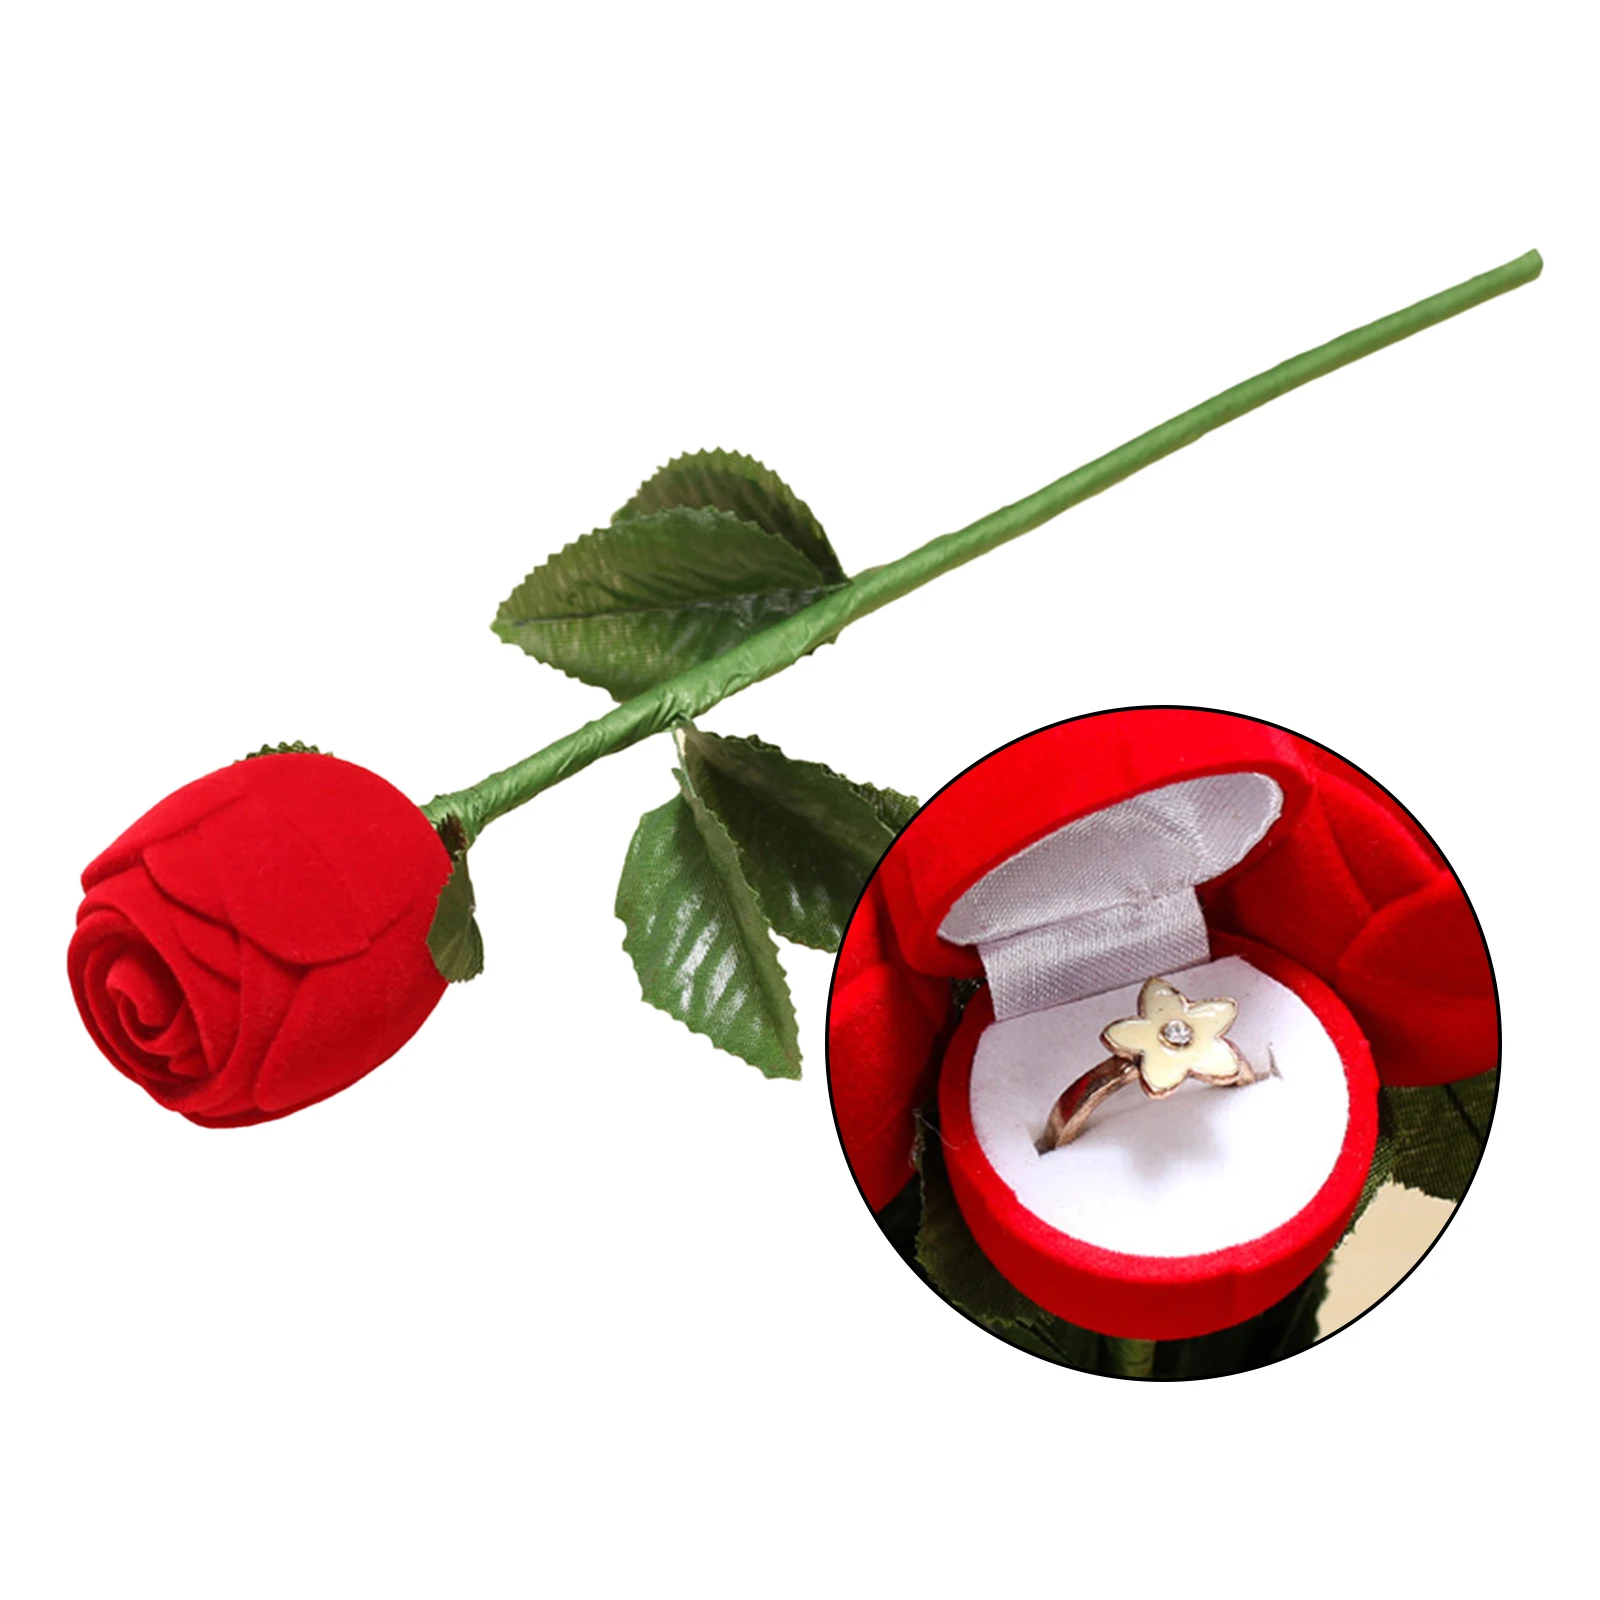 Red Rose Jewelry Box Bottom with Green Leaf Velvet Flannelette Engagement Wedding Ring Gift Case Display Holder